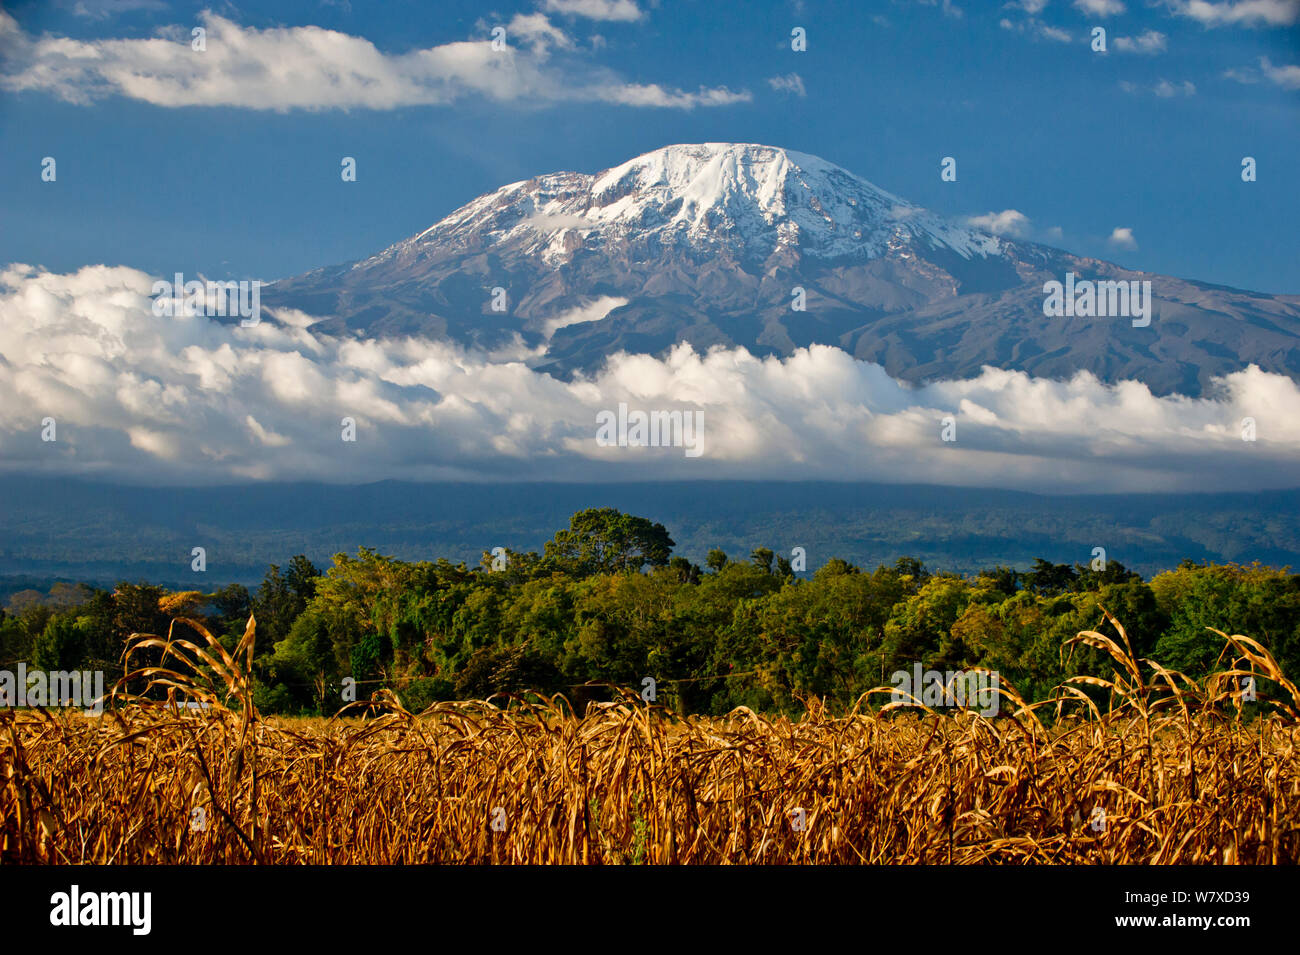 Field of African maize (Zea Mays) below Mount Kilimanjaro, Tanzania, East Africa. August 2010. Stock Photo